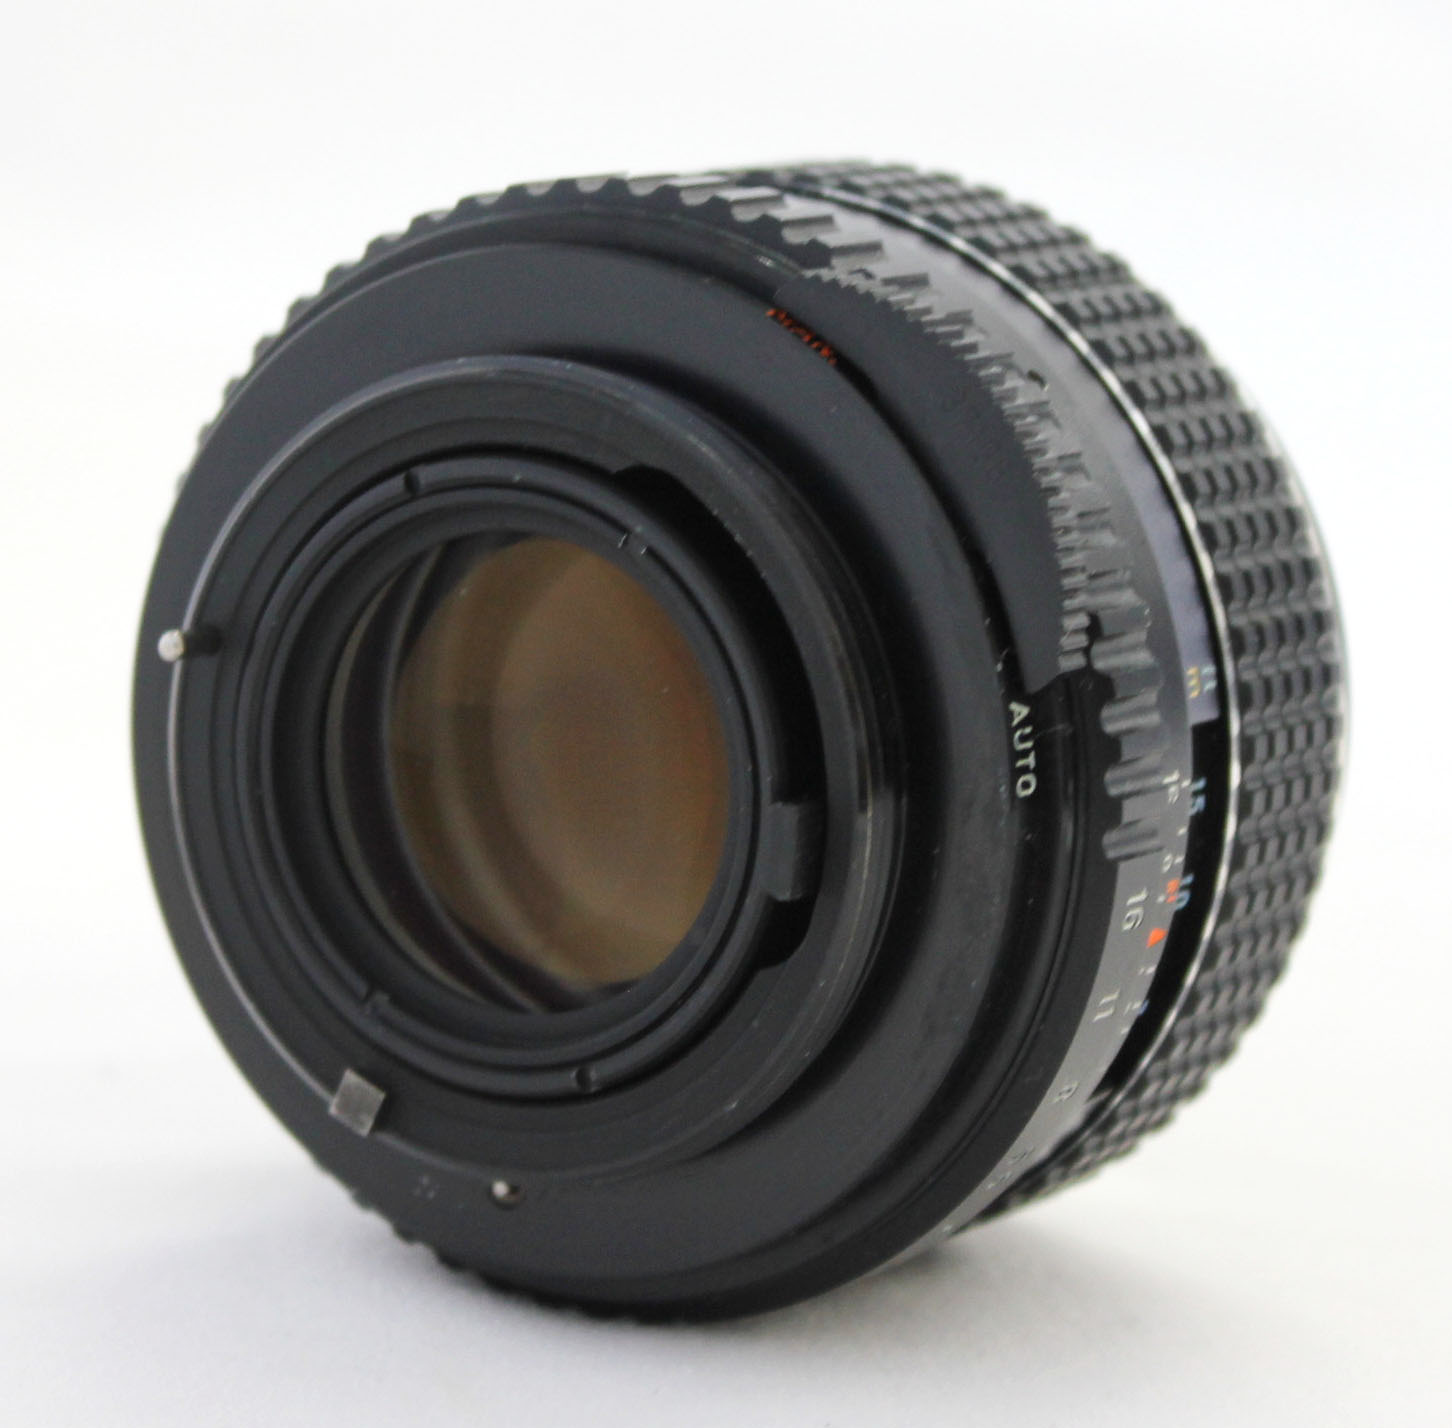 Asahi Pentax Spotmatic F SPF 35mm SLR Camera with SMC Takumar 55mm F/1.8 Lens and Case from Japan Photo 13